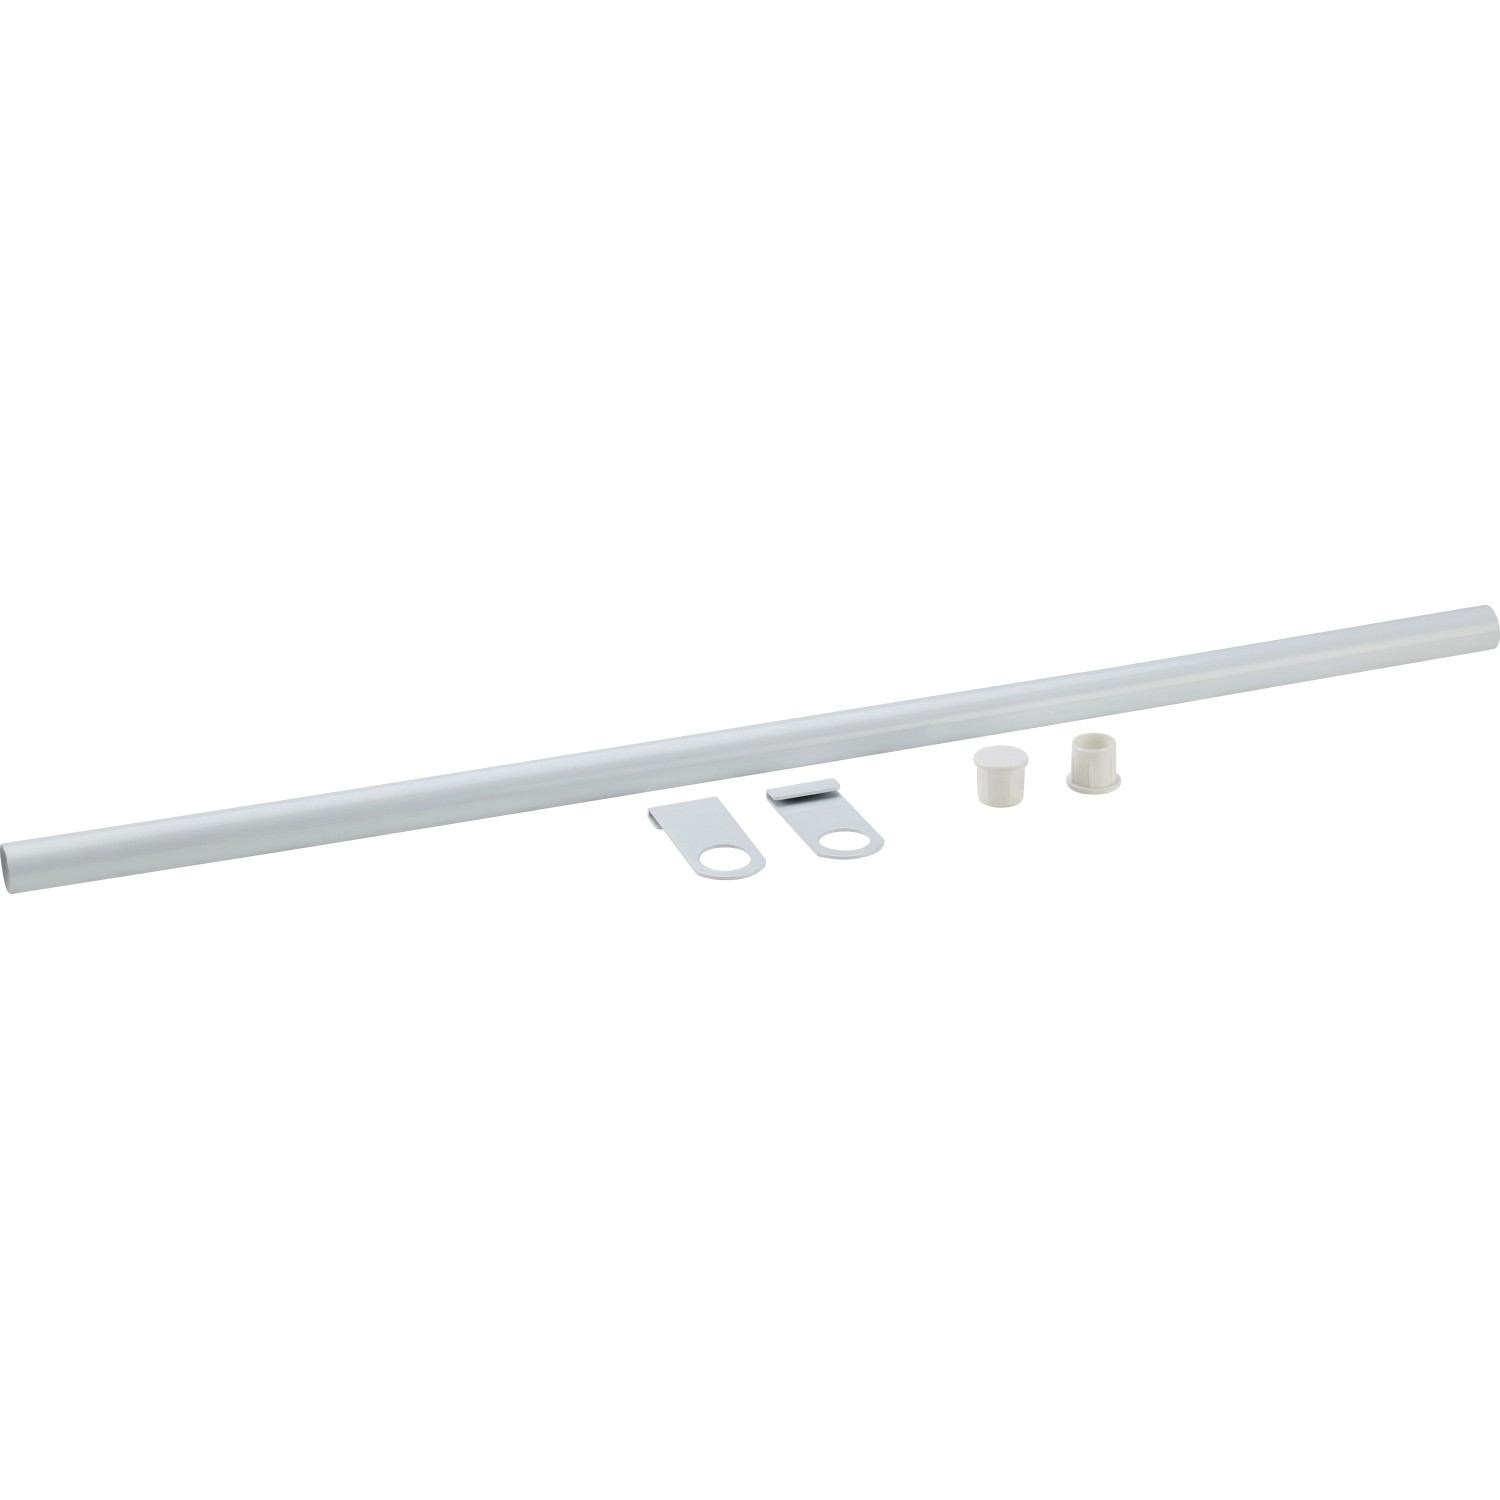 BOAXEL mensola, metallo bianco, 80x40 cm - IKEA Italia